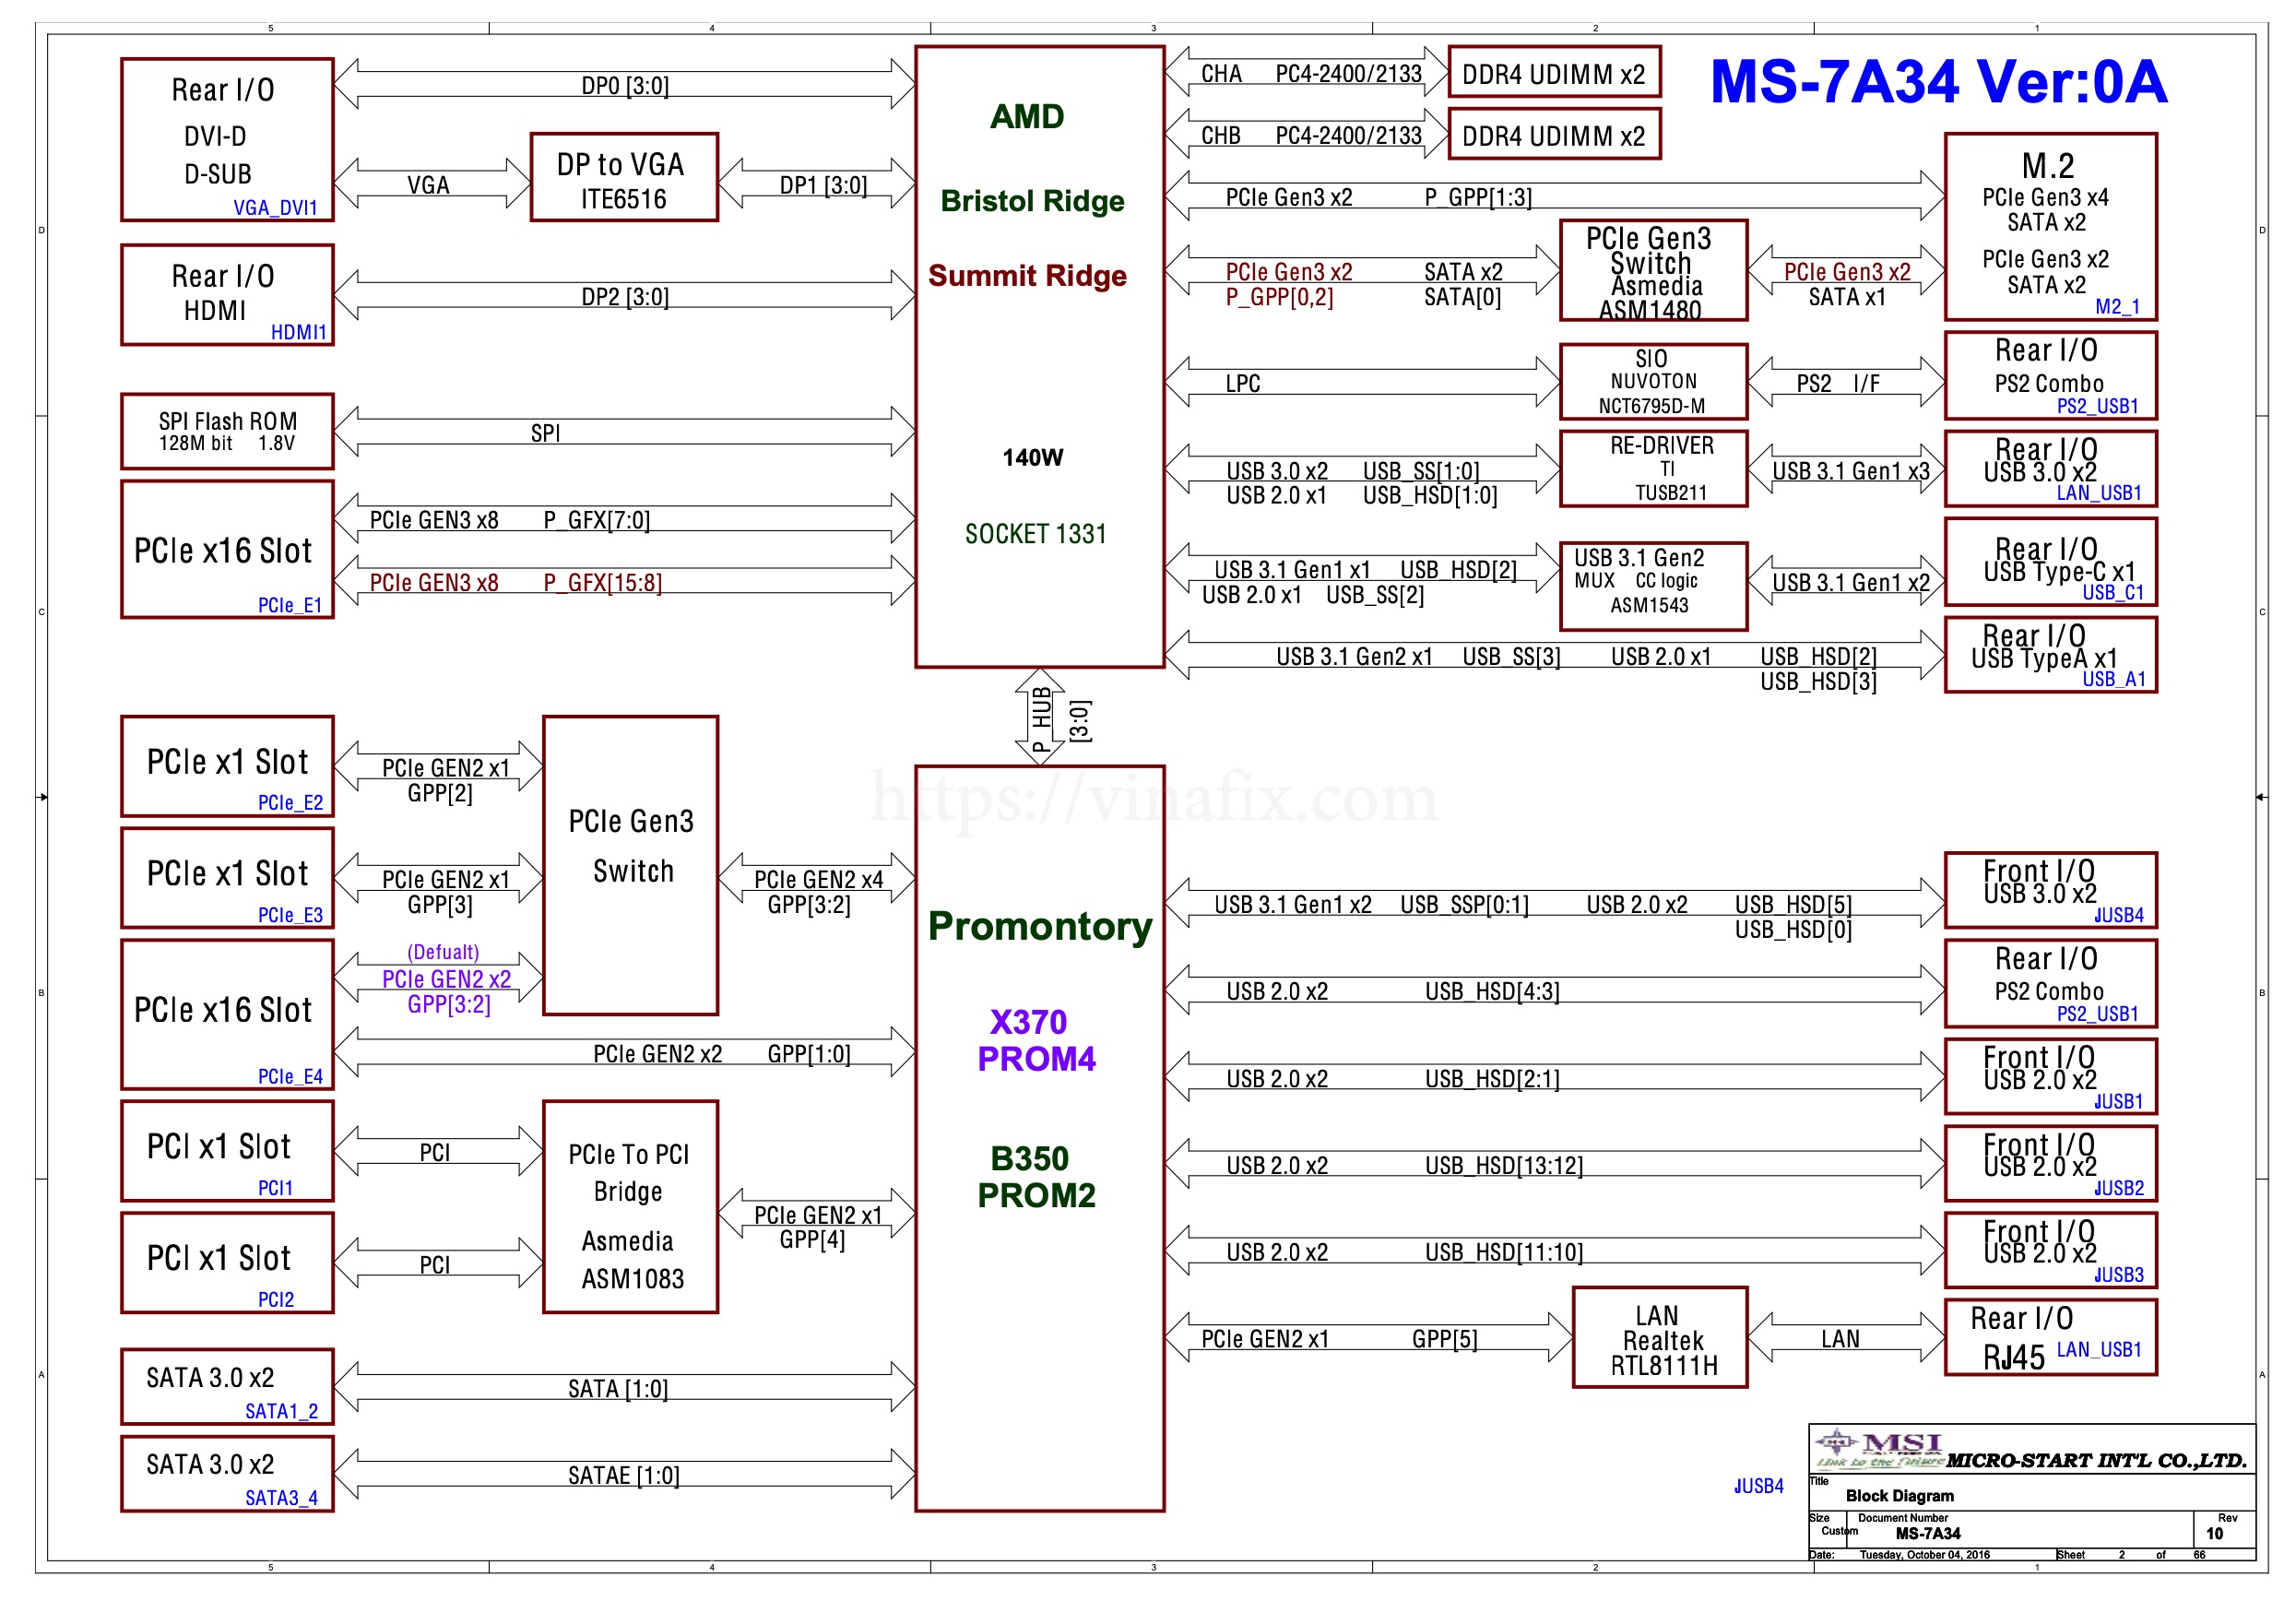 MS-7A34 MS-7A341 Schematics boardview .jpg